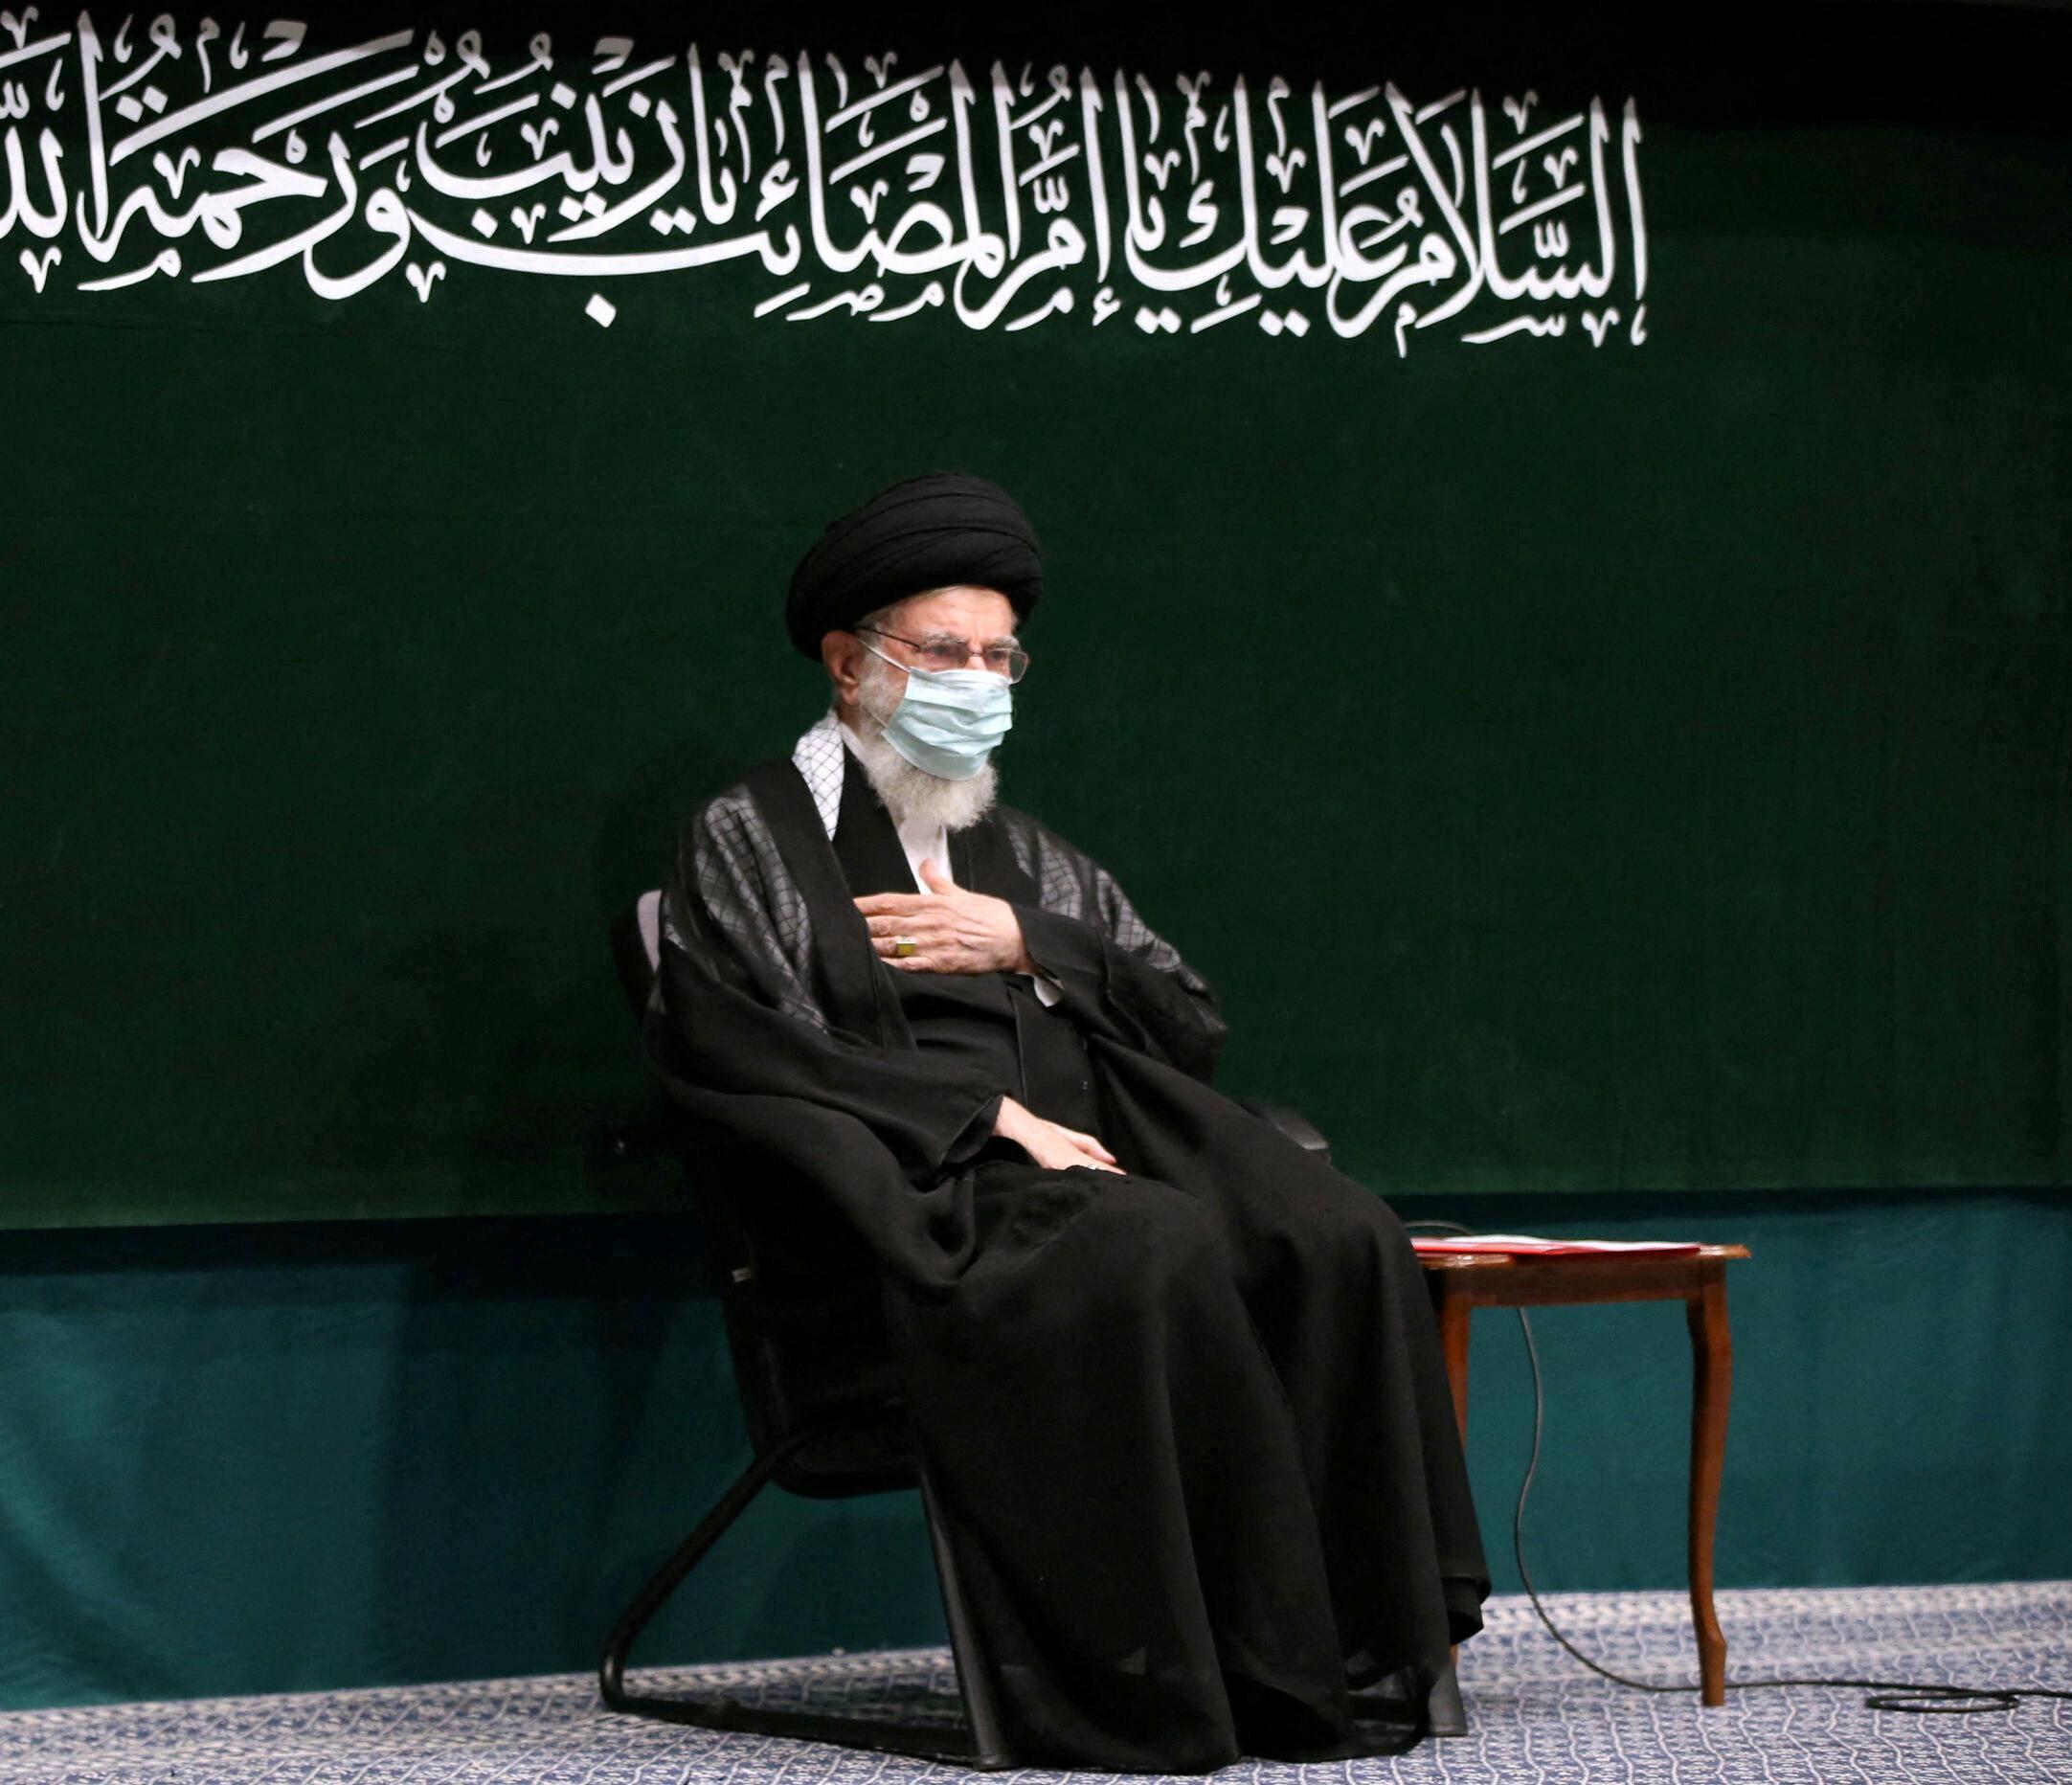 ifmat - Khamenei gives second televised speech after report of illness